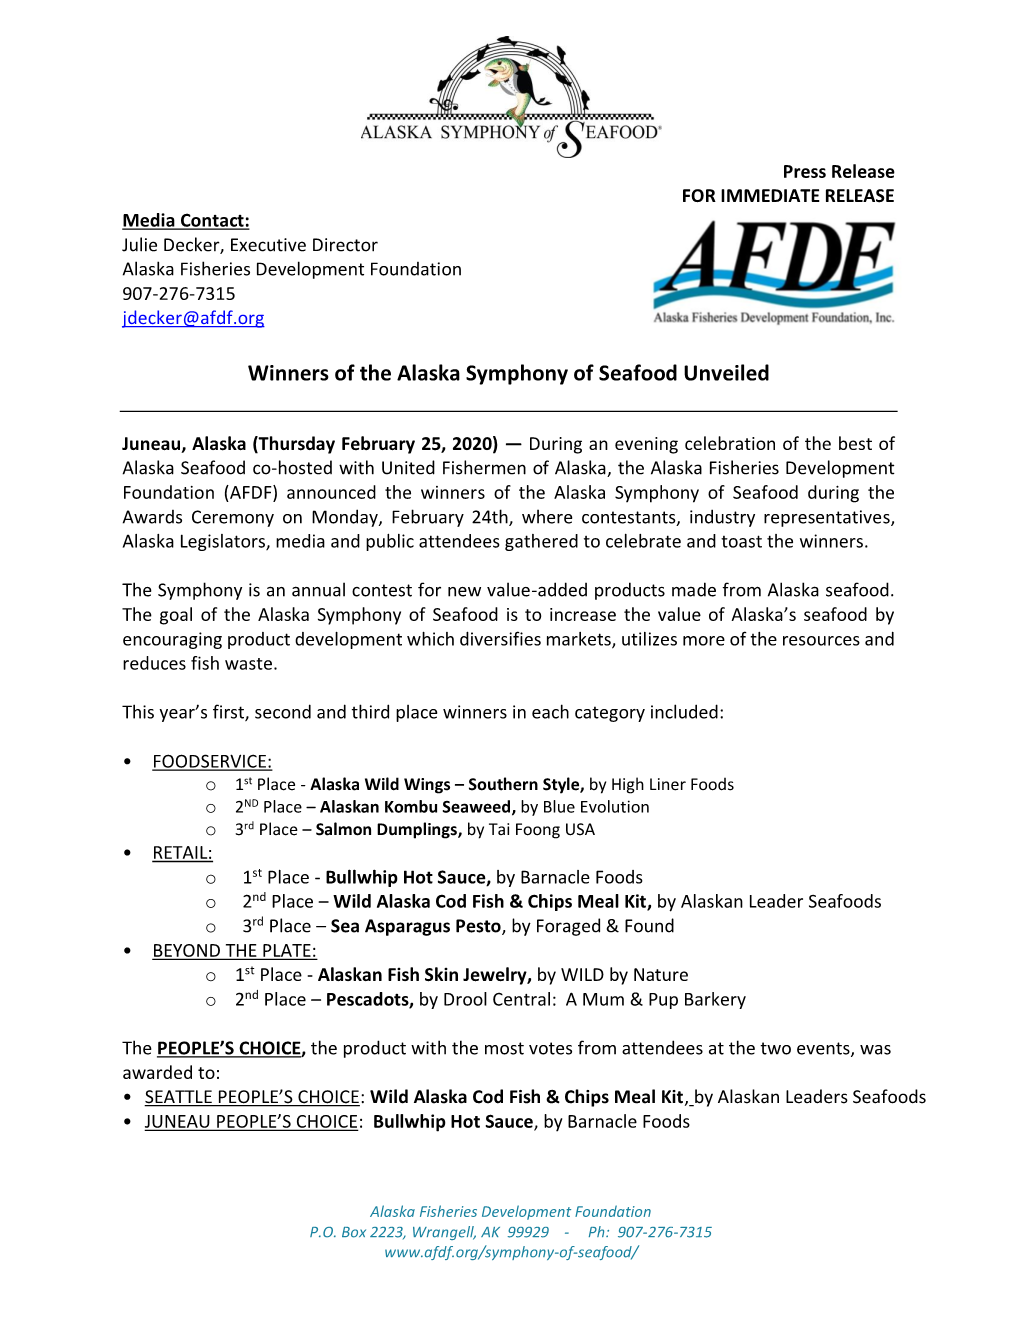 Press Release for IMMEDIATE RELEASE Media Contact: Julie Decker, Executive Director Alaska Fisheries Development Foundation 907-276-7315 Jdecker@Afdf.Org